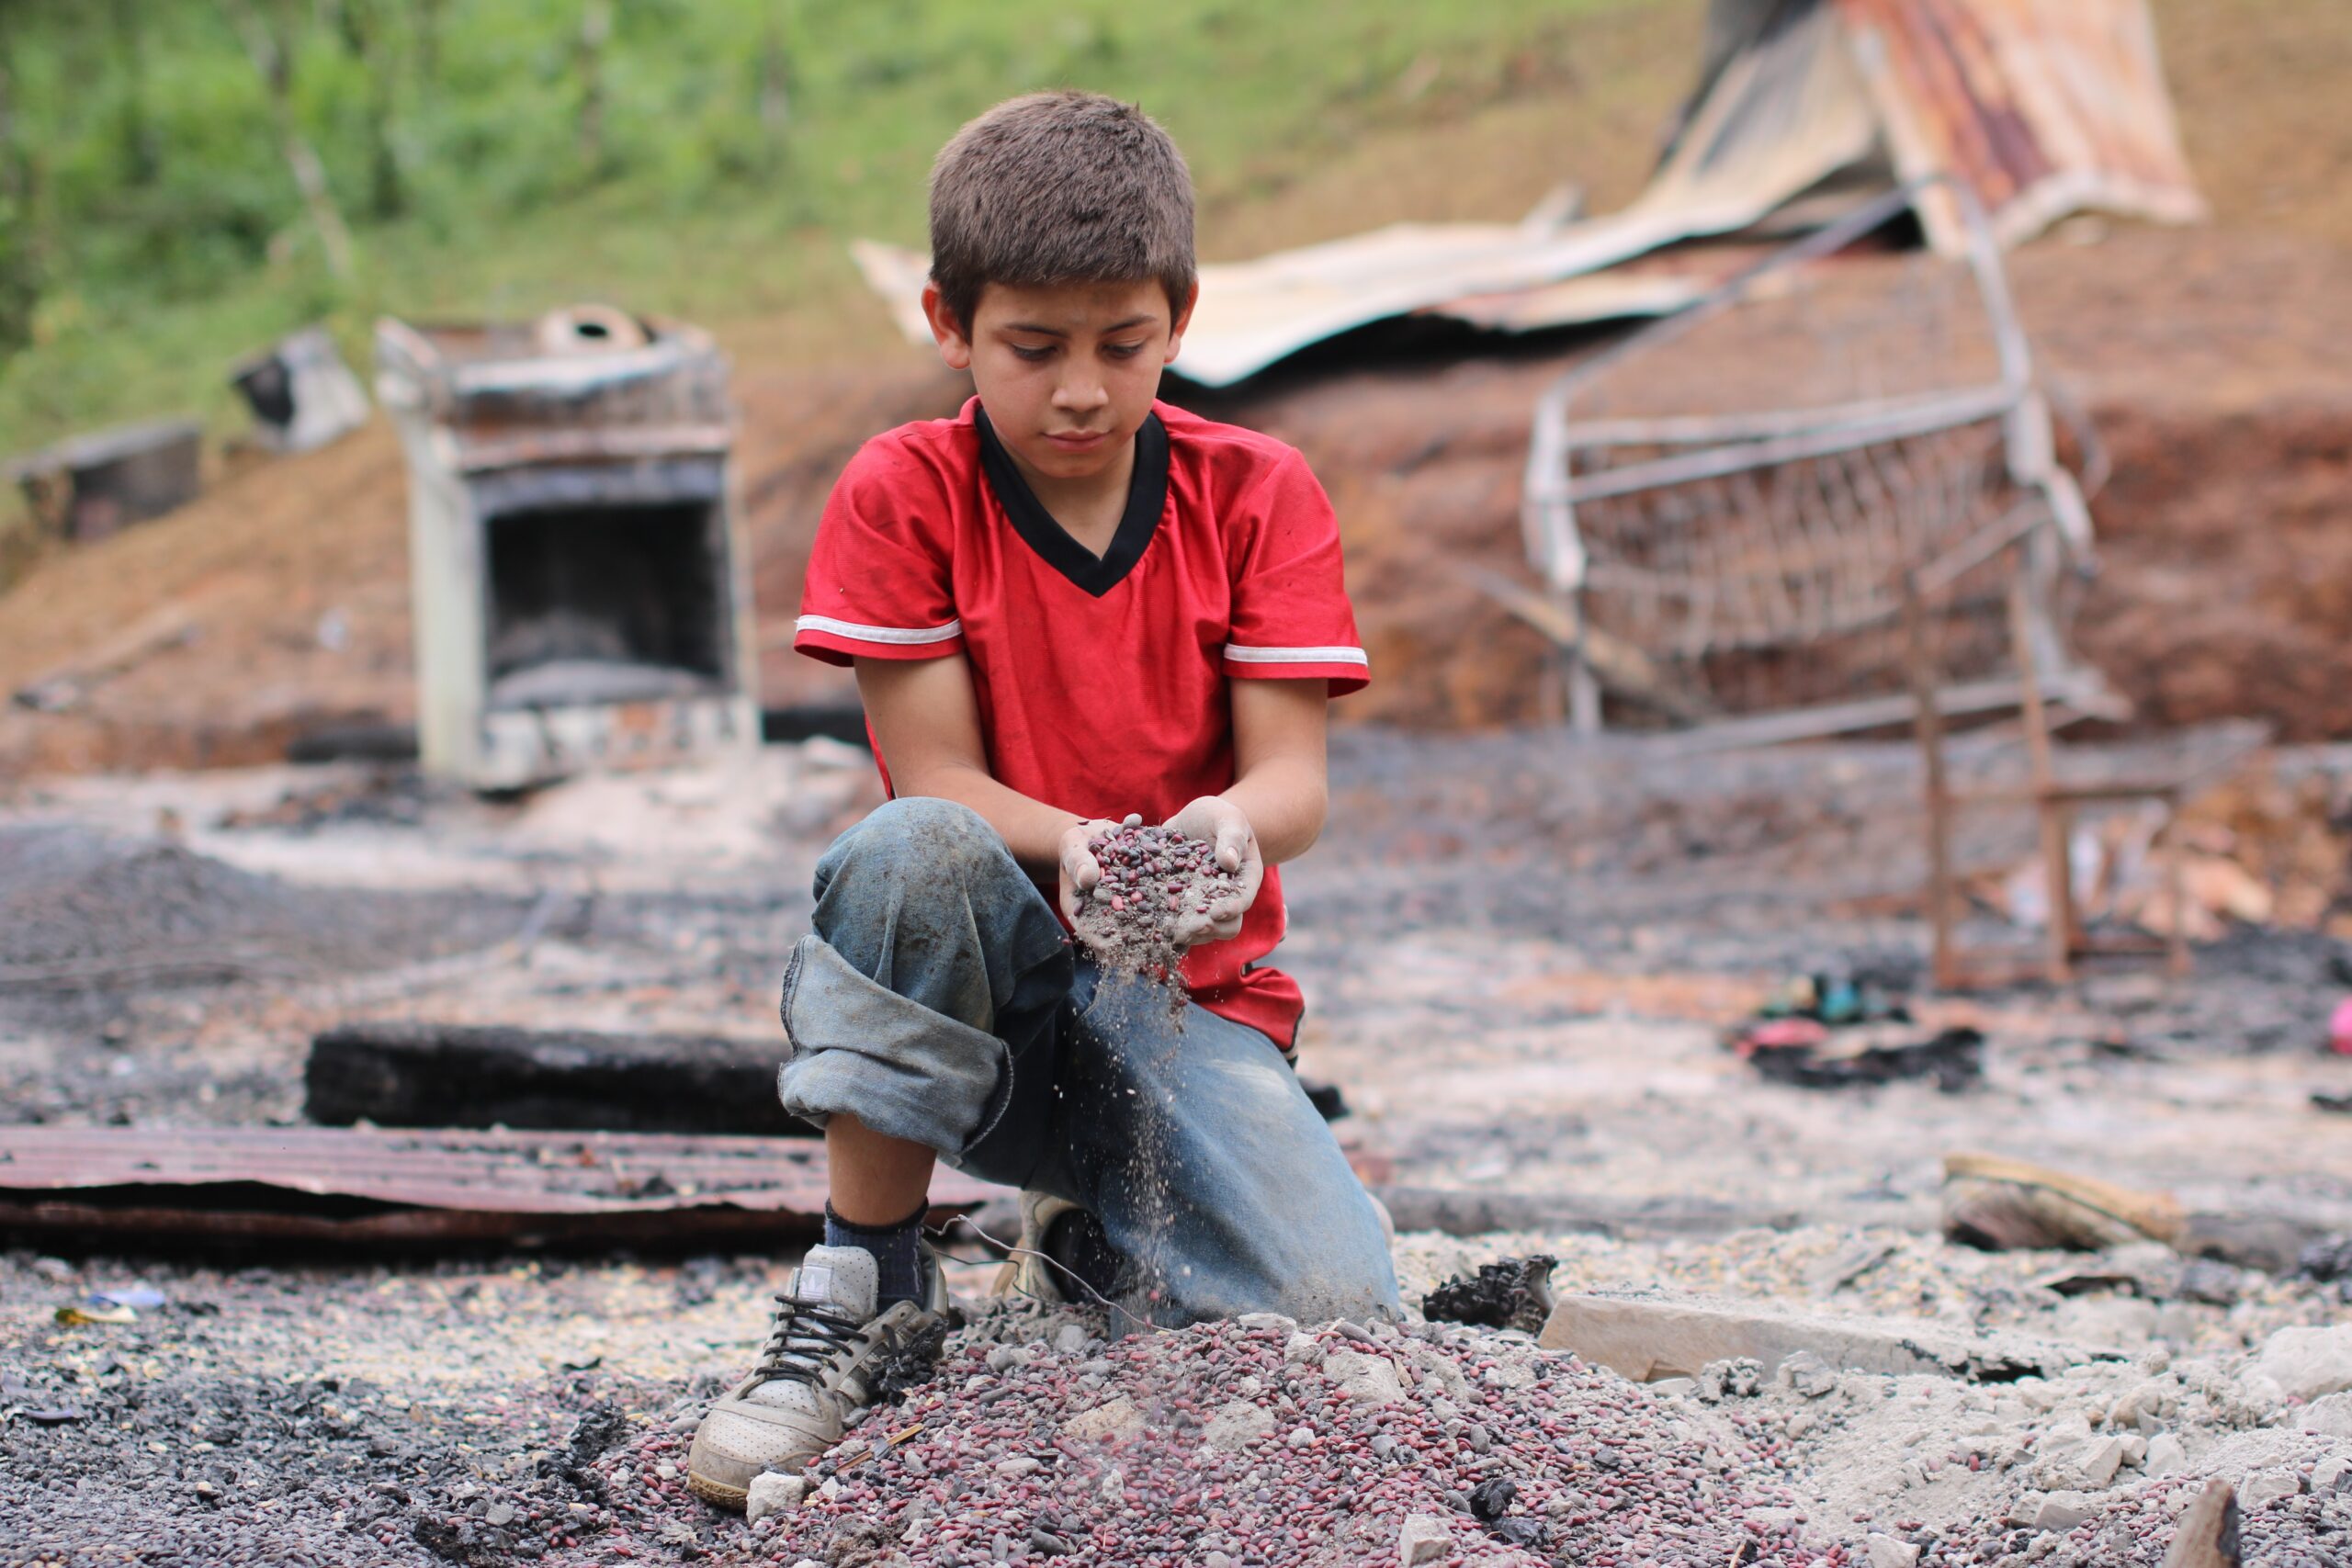 Ending Child Labor in Honduras: Listening to the community